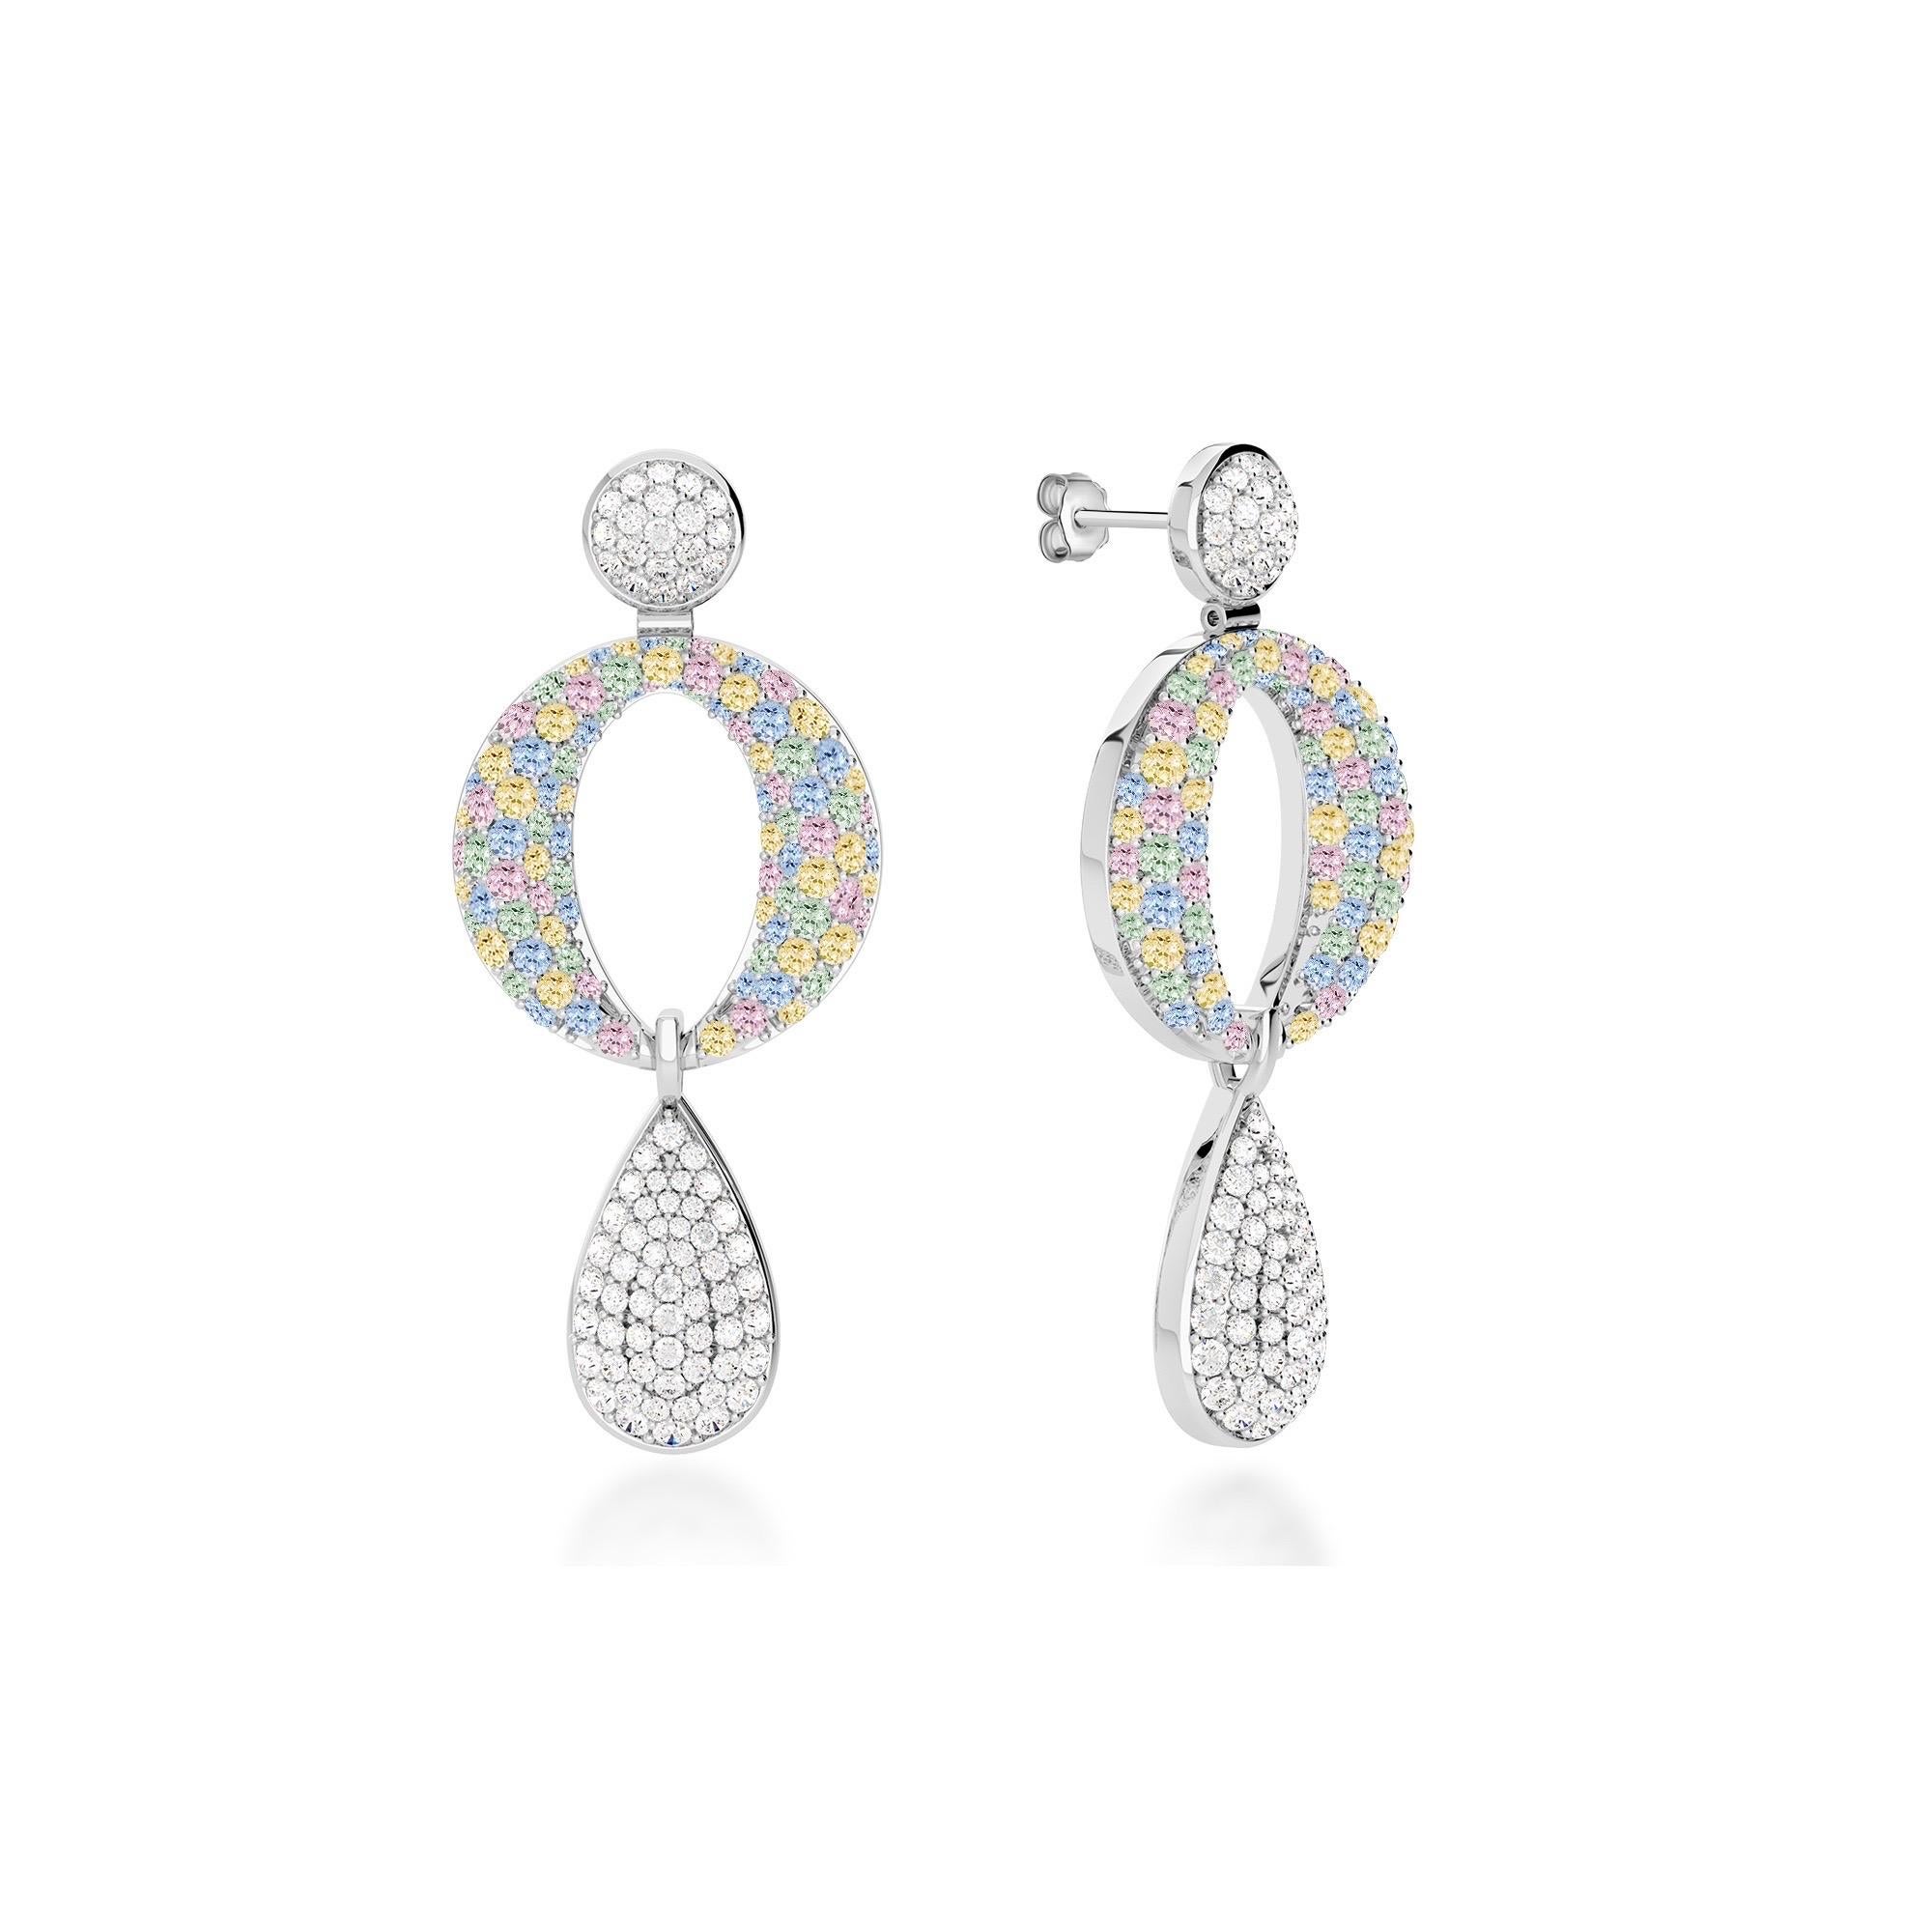 Ruben Manuel Designs “Spring” Earrings.   18K WG Earrings (post) set w/pastel sapphires and white diamond pave.  3.06 ctw.